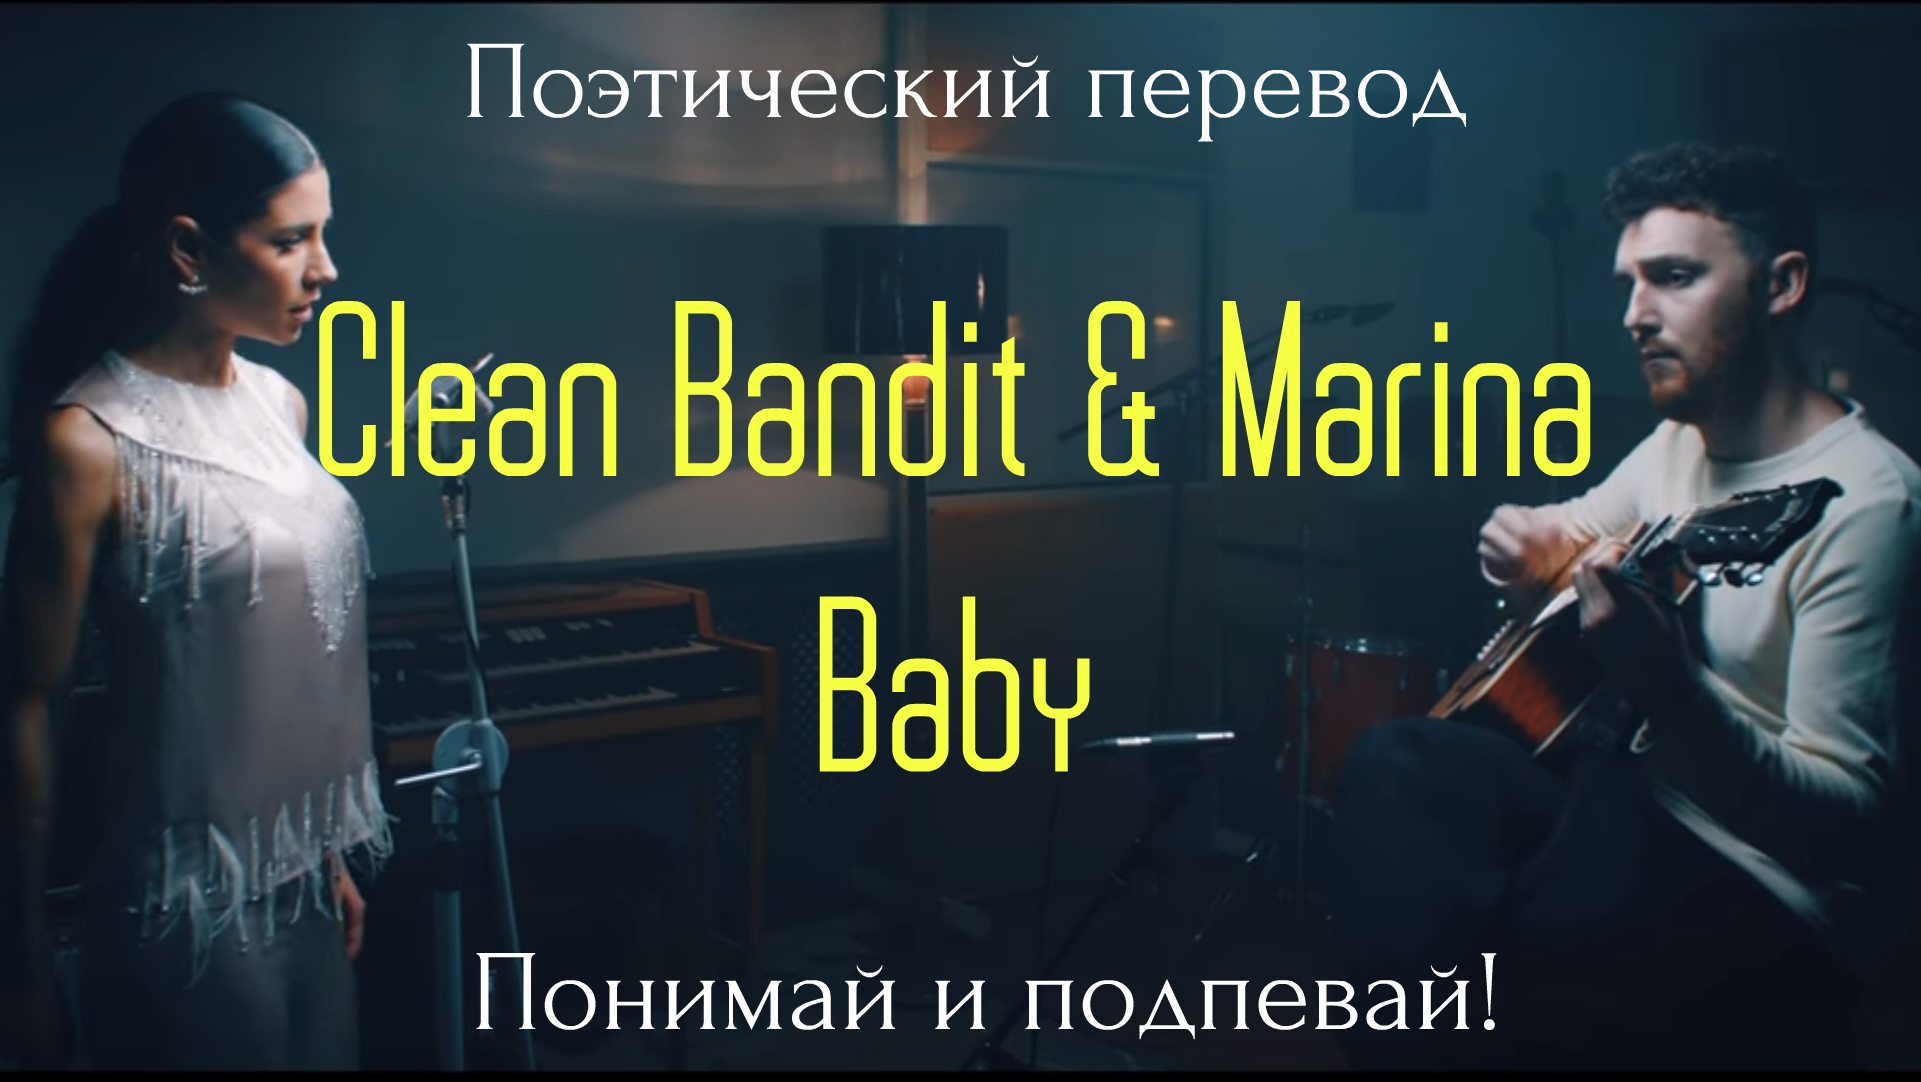 Clean Bandit feat. Marina & Luis Fonsi - Baby. Baby clean Bandit feat. Marina and the Diamonds Luis Fonsi. Песня бейби Райт НАУ Автор. Solo me перевод